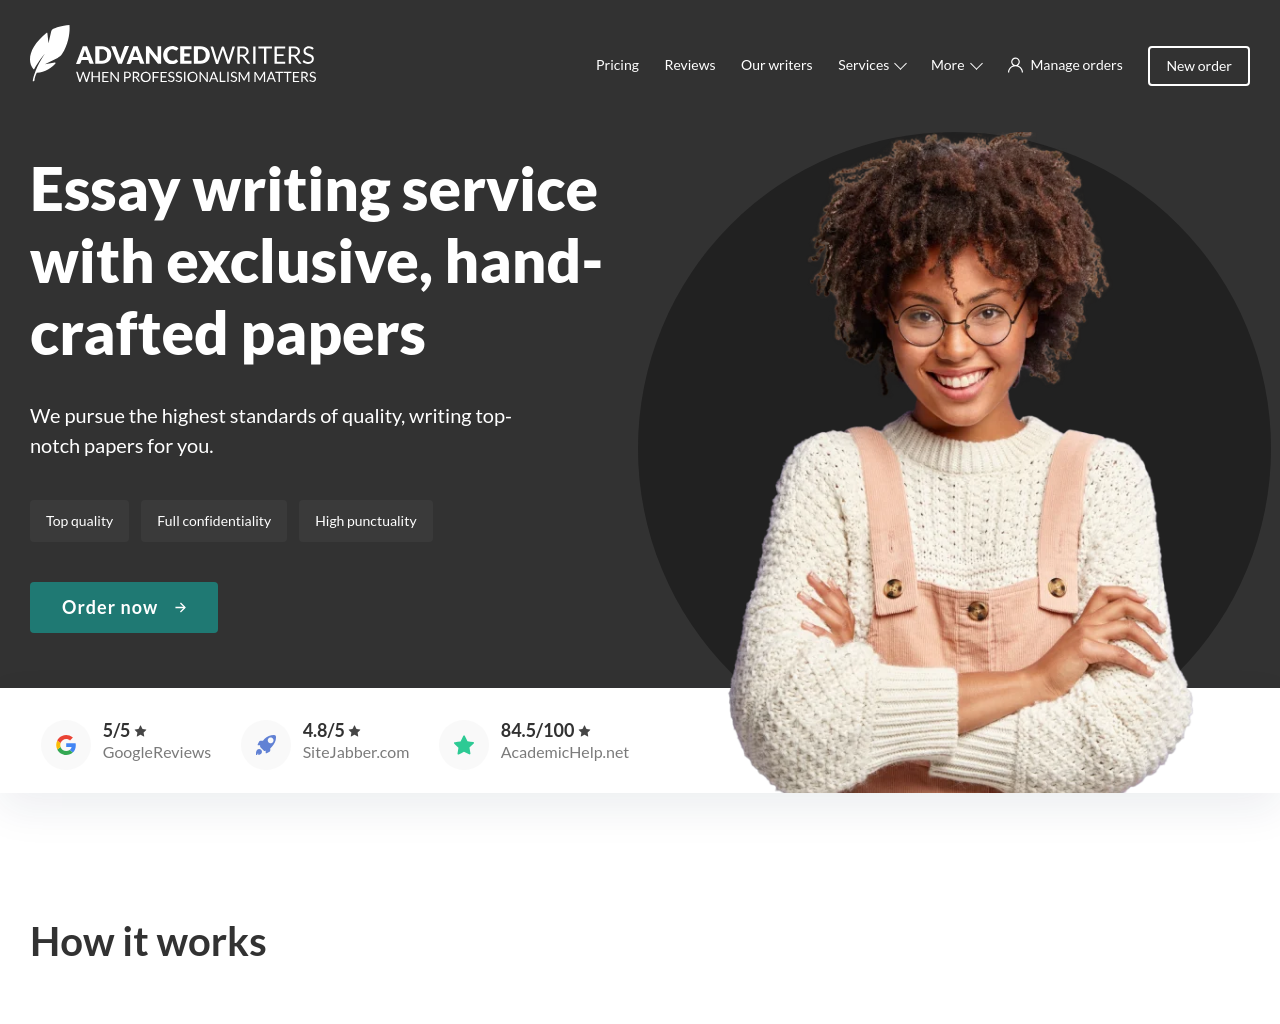 advancedwriters.com